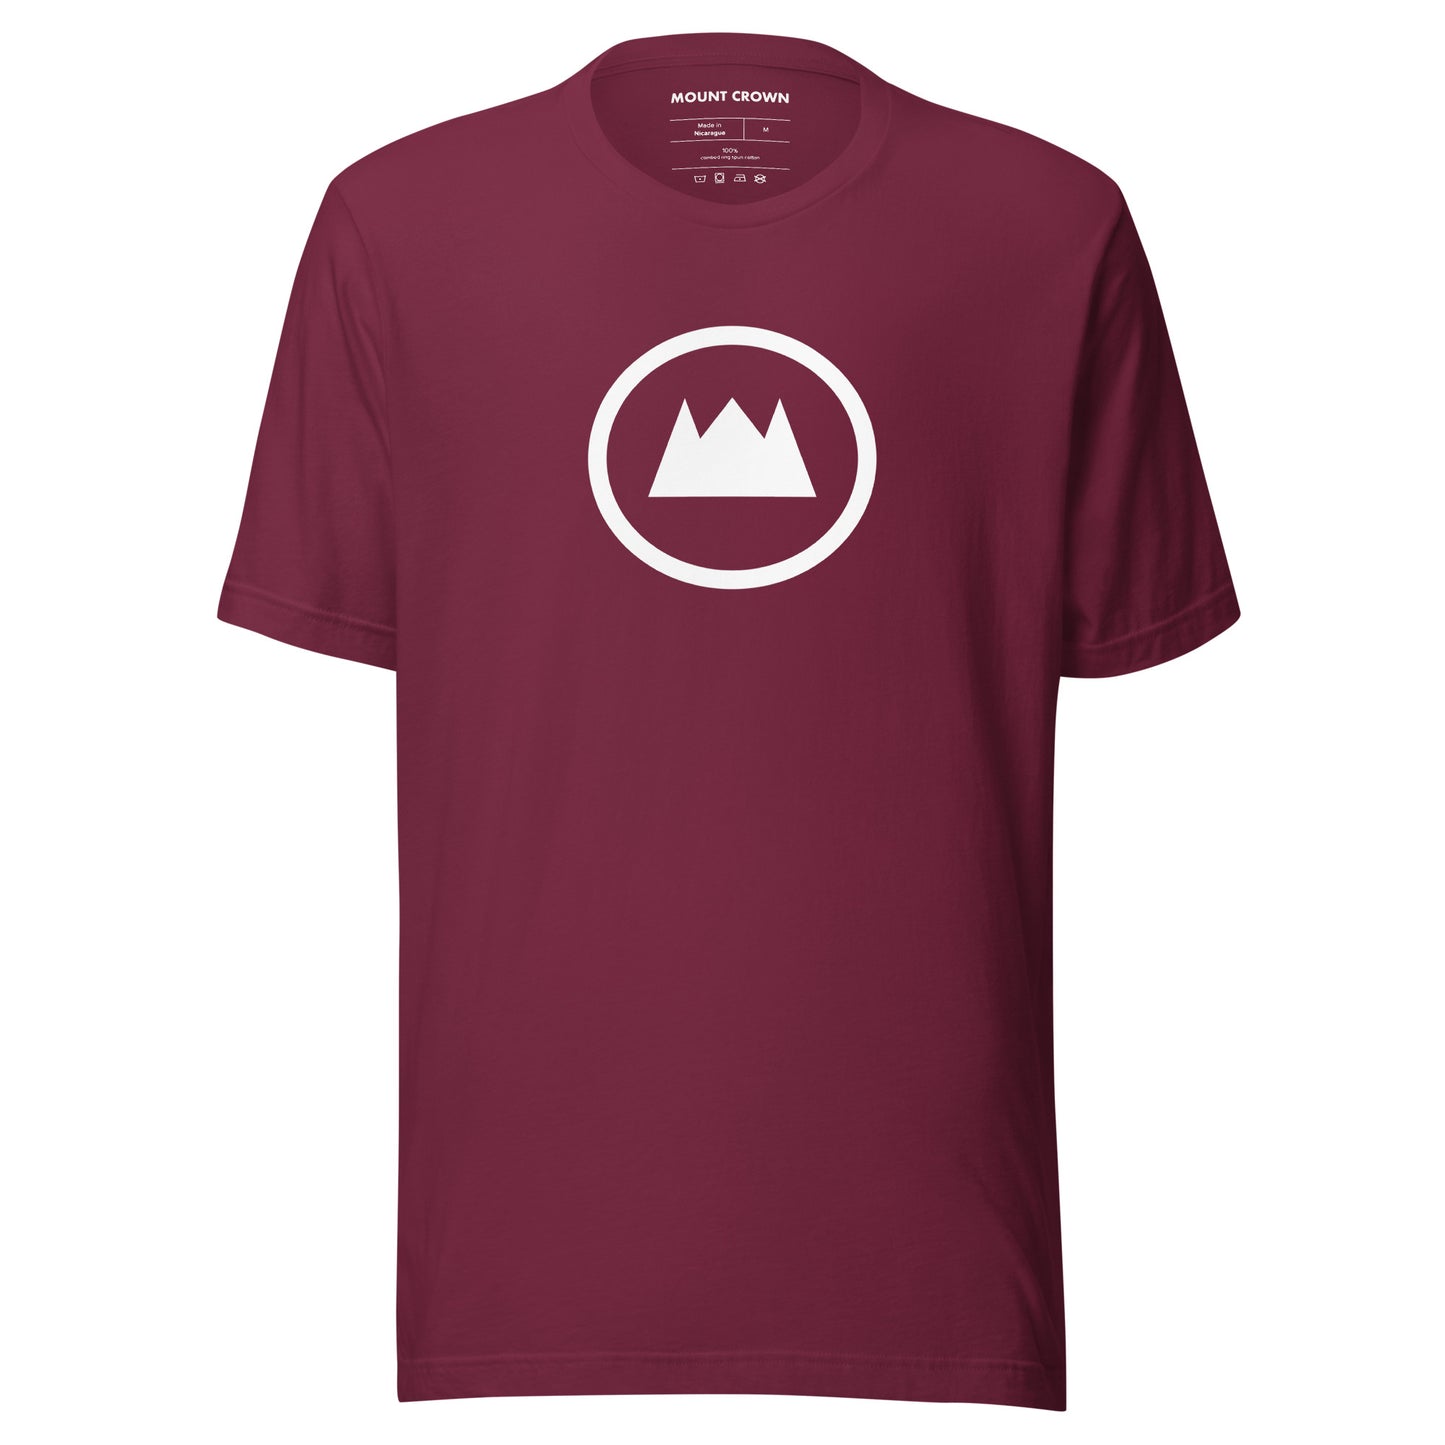 MOUNT CROWN (Wh) T-shirt